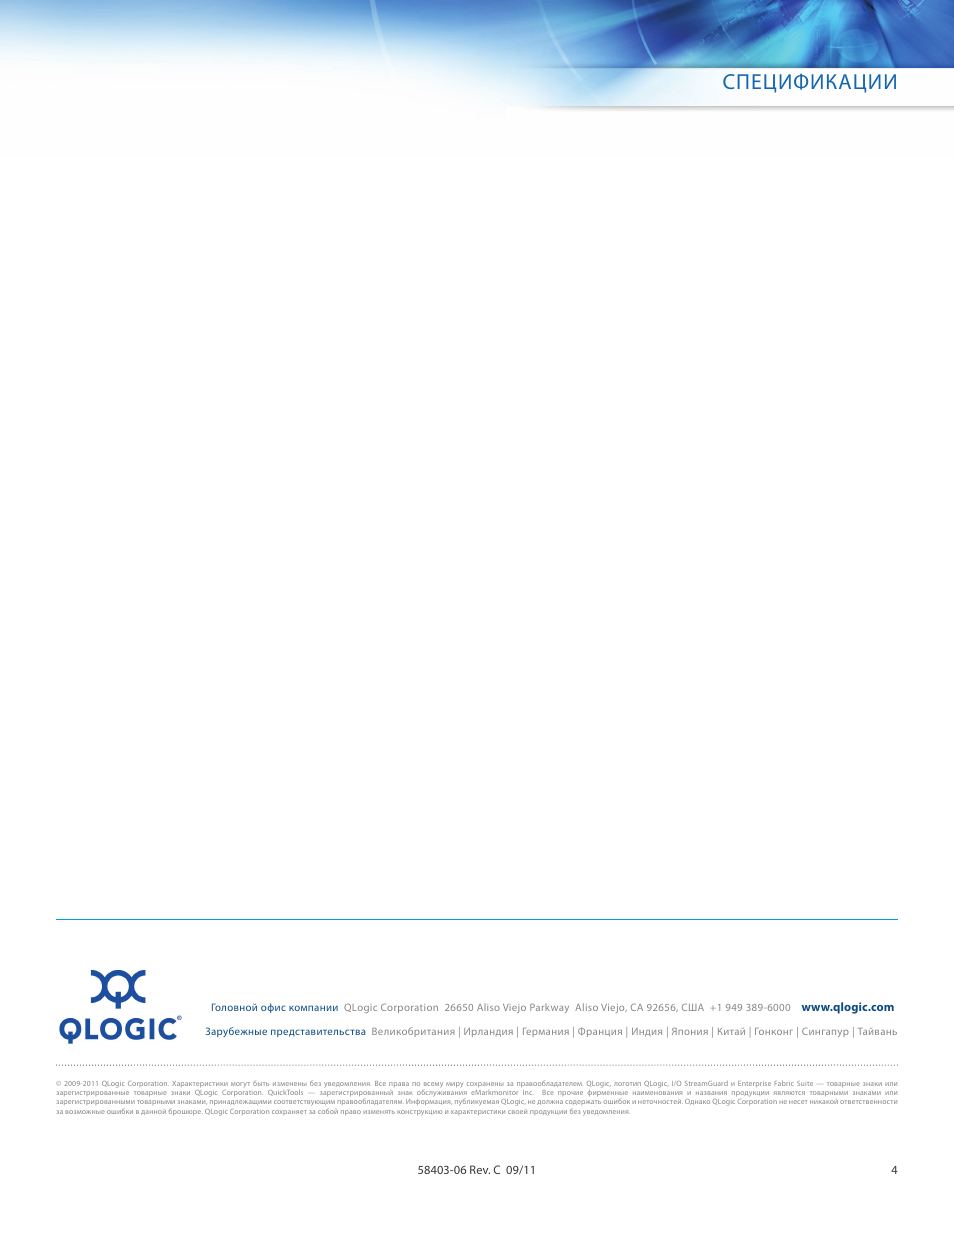 Спецификации | Инструкция по эксплуатации QLogic 3810 | Страница 4 / 4